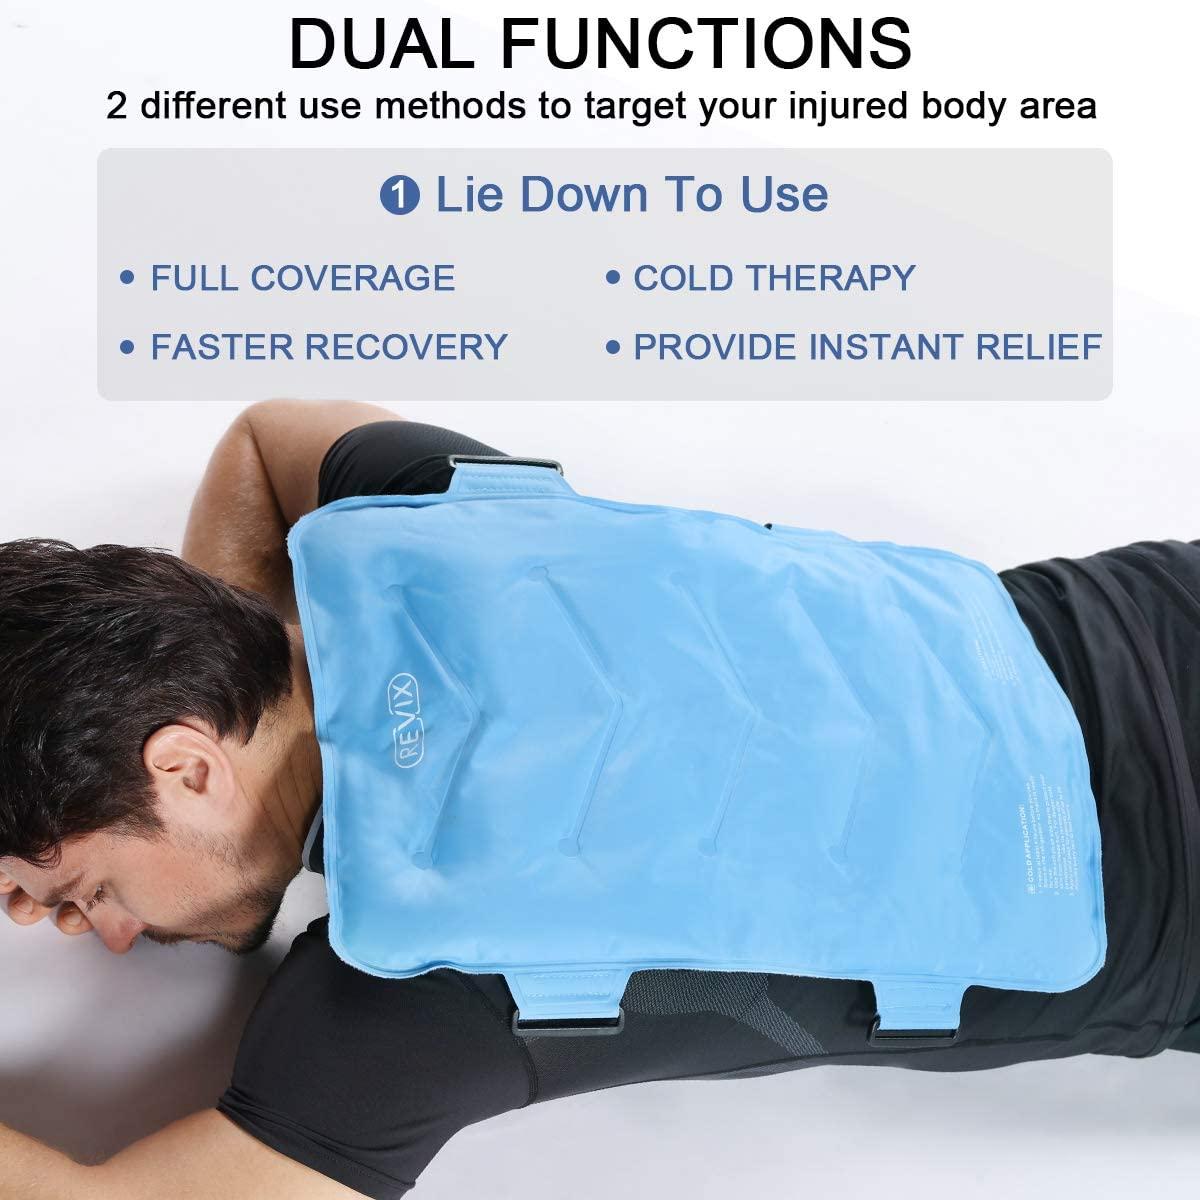 REVIX Large Ice Pack for Shoulder and Back Injuries Reusable Gel